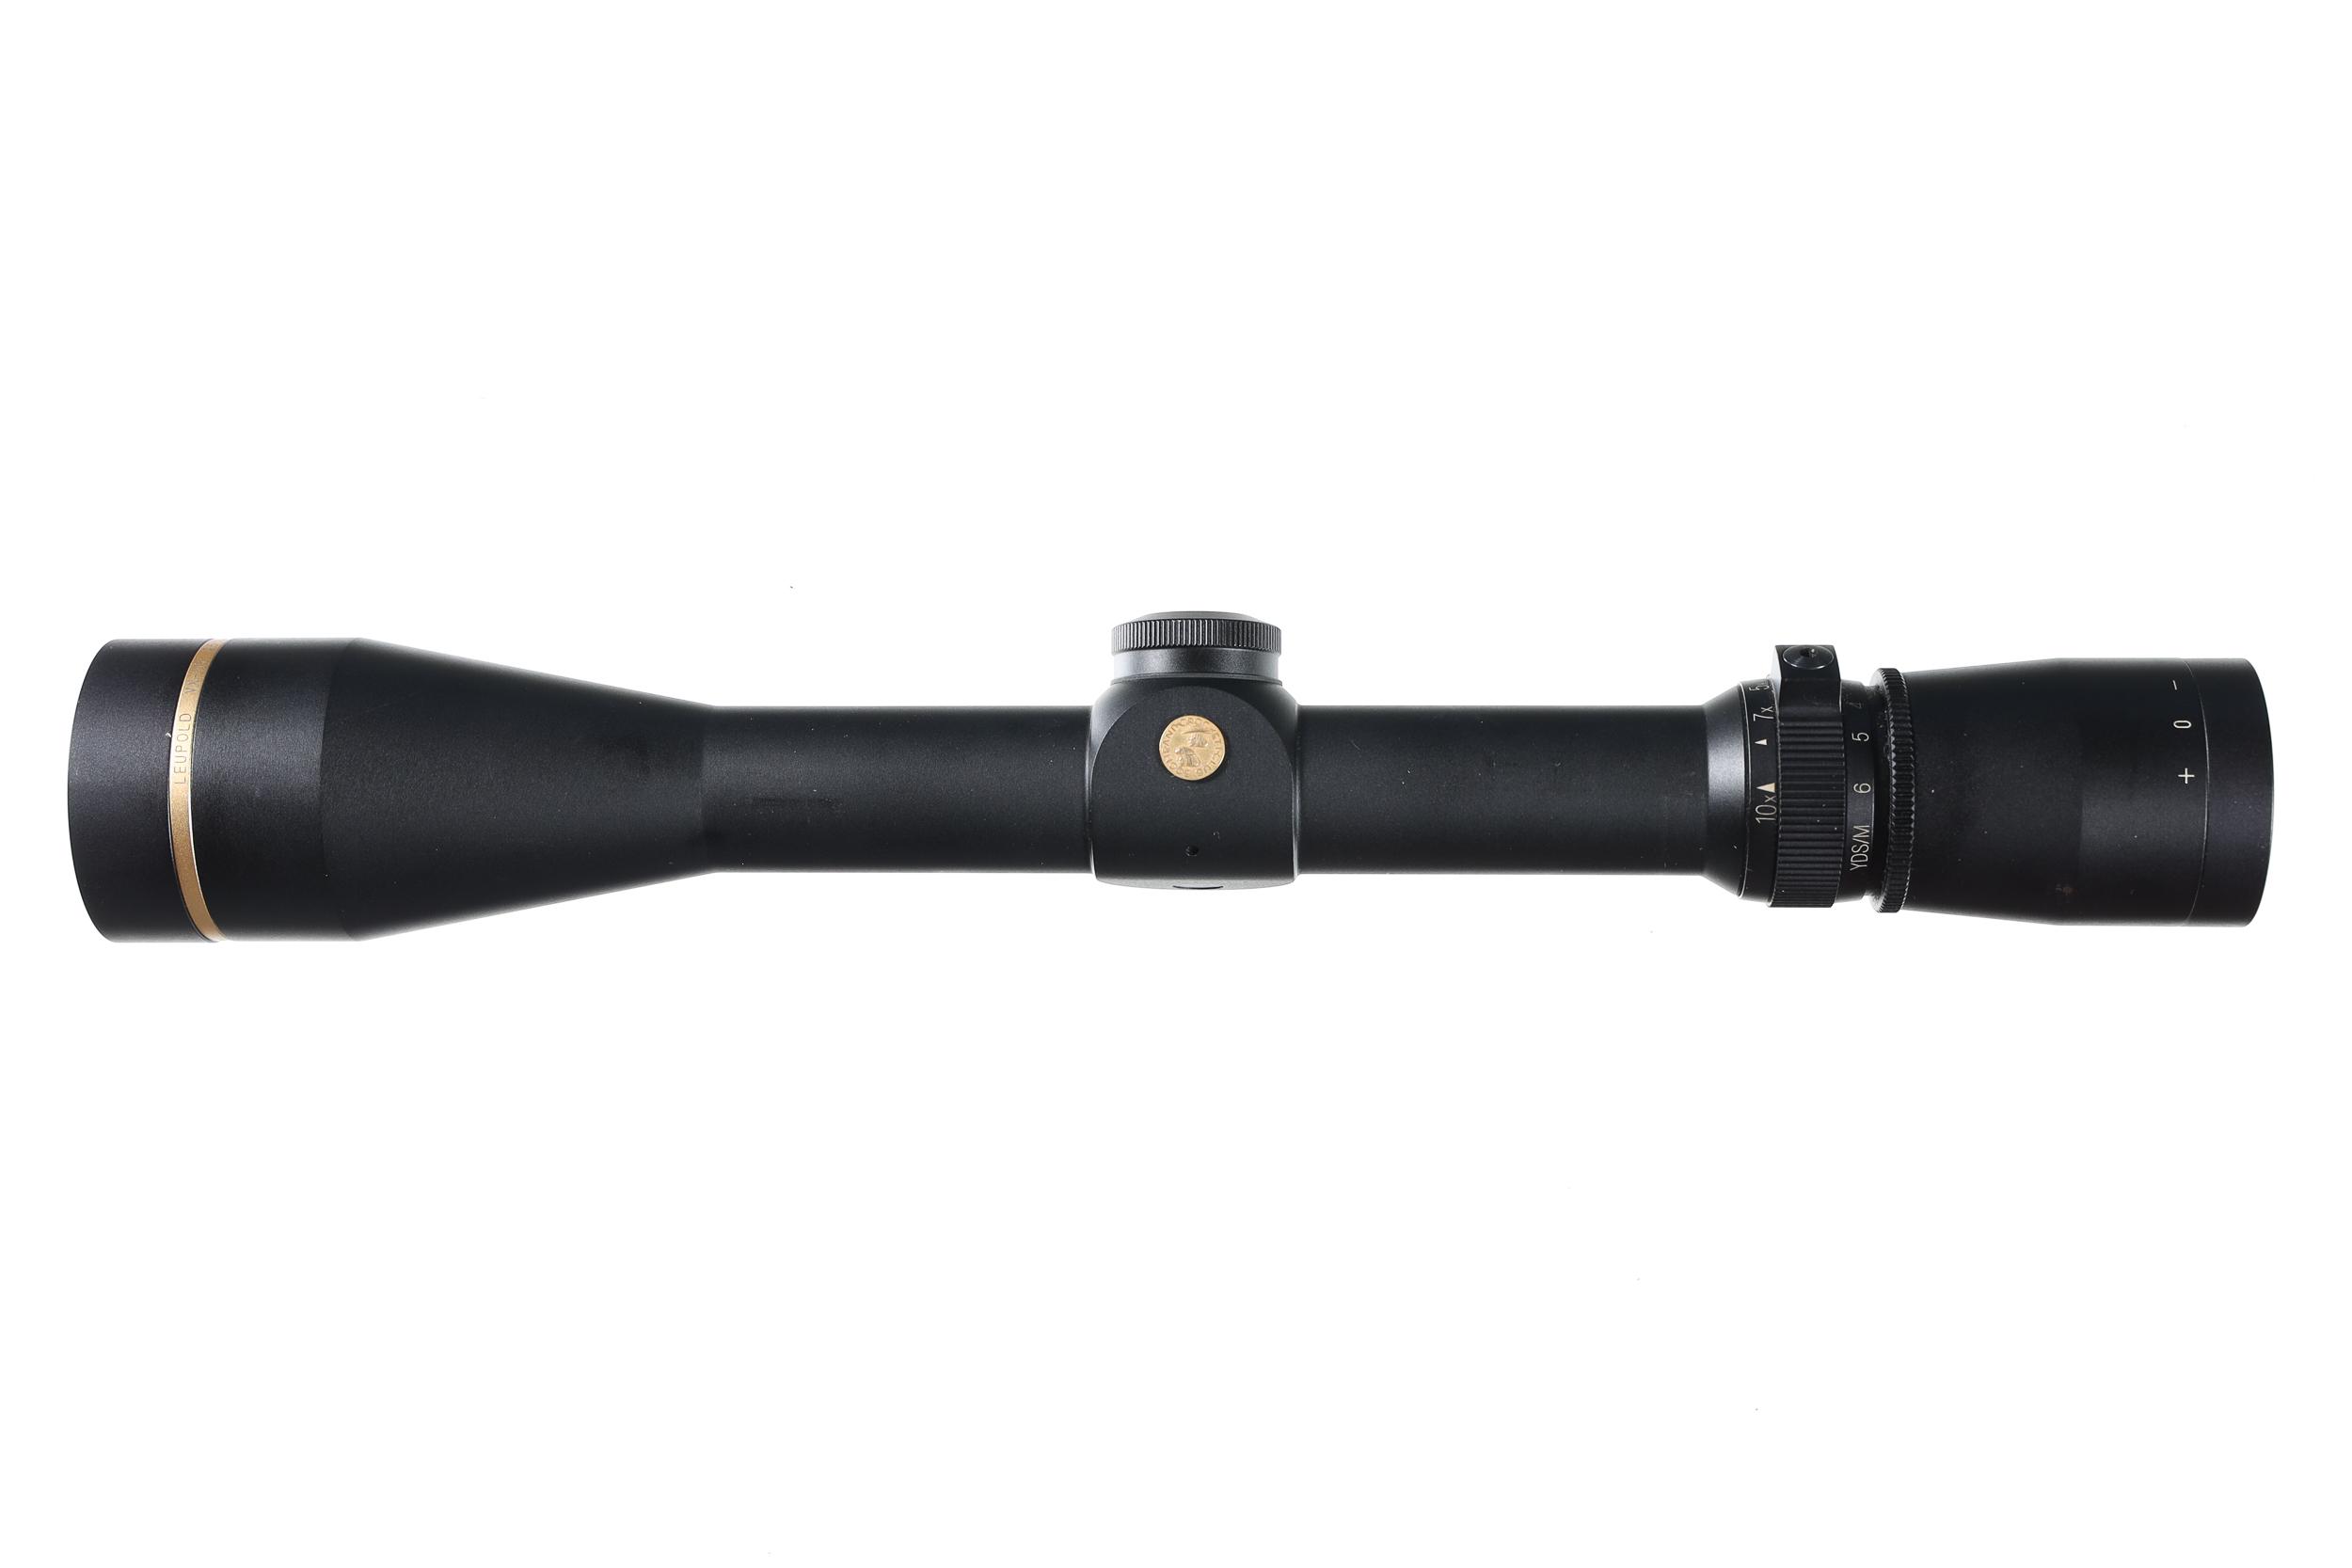 Leupold VX-III 3.5-10x40 scope